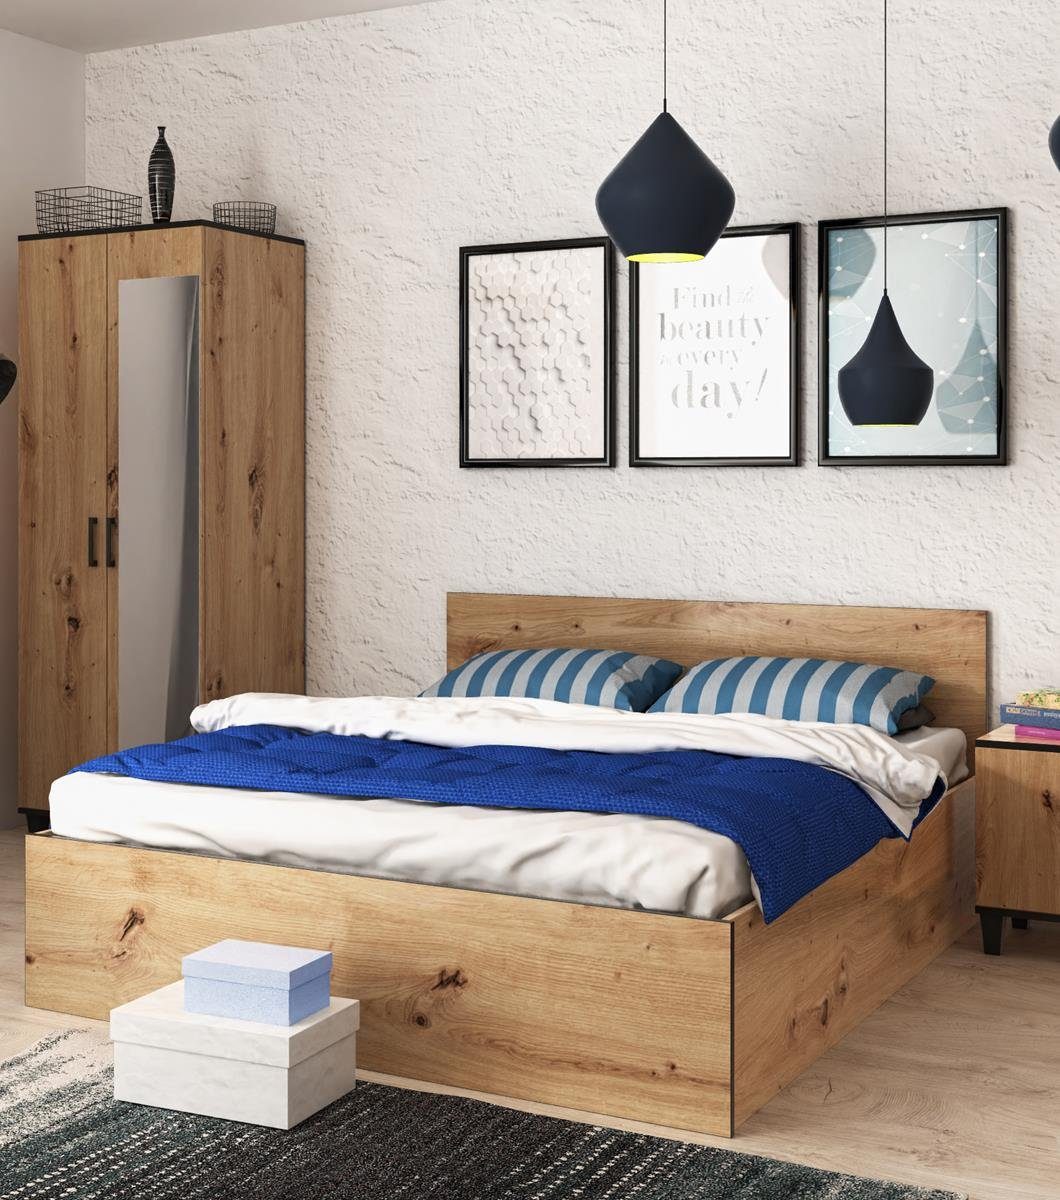 Beautysofa Holzbett C10 (160x200 cm Bett im Loft Stil inklusive Bettkasten), mit Holzrahmen und Lattenrost